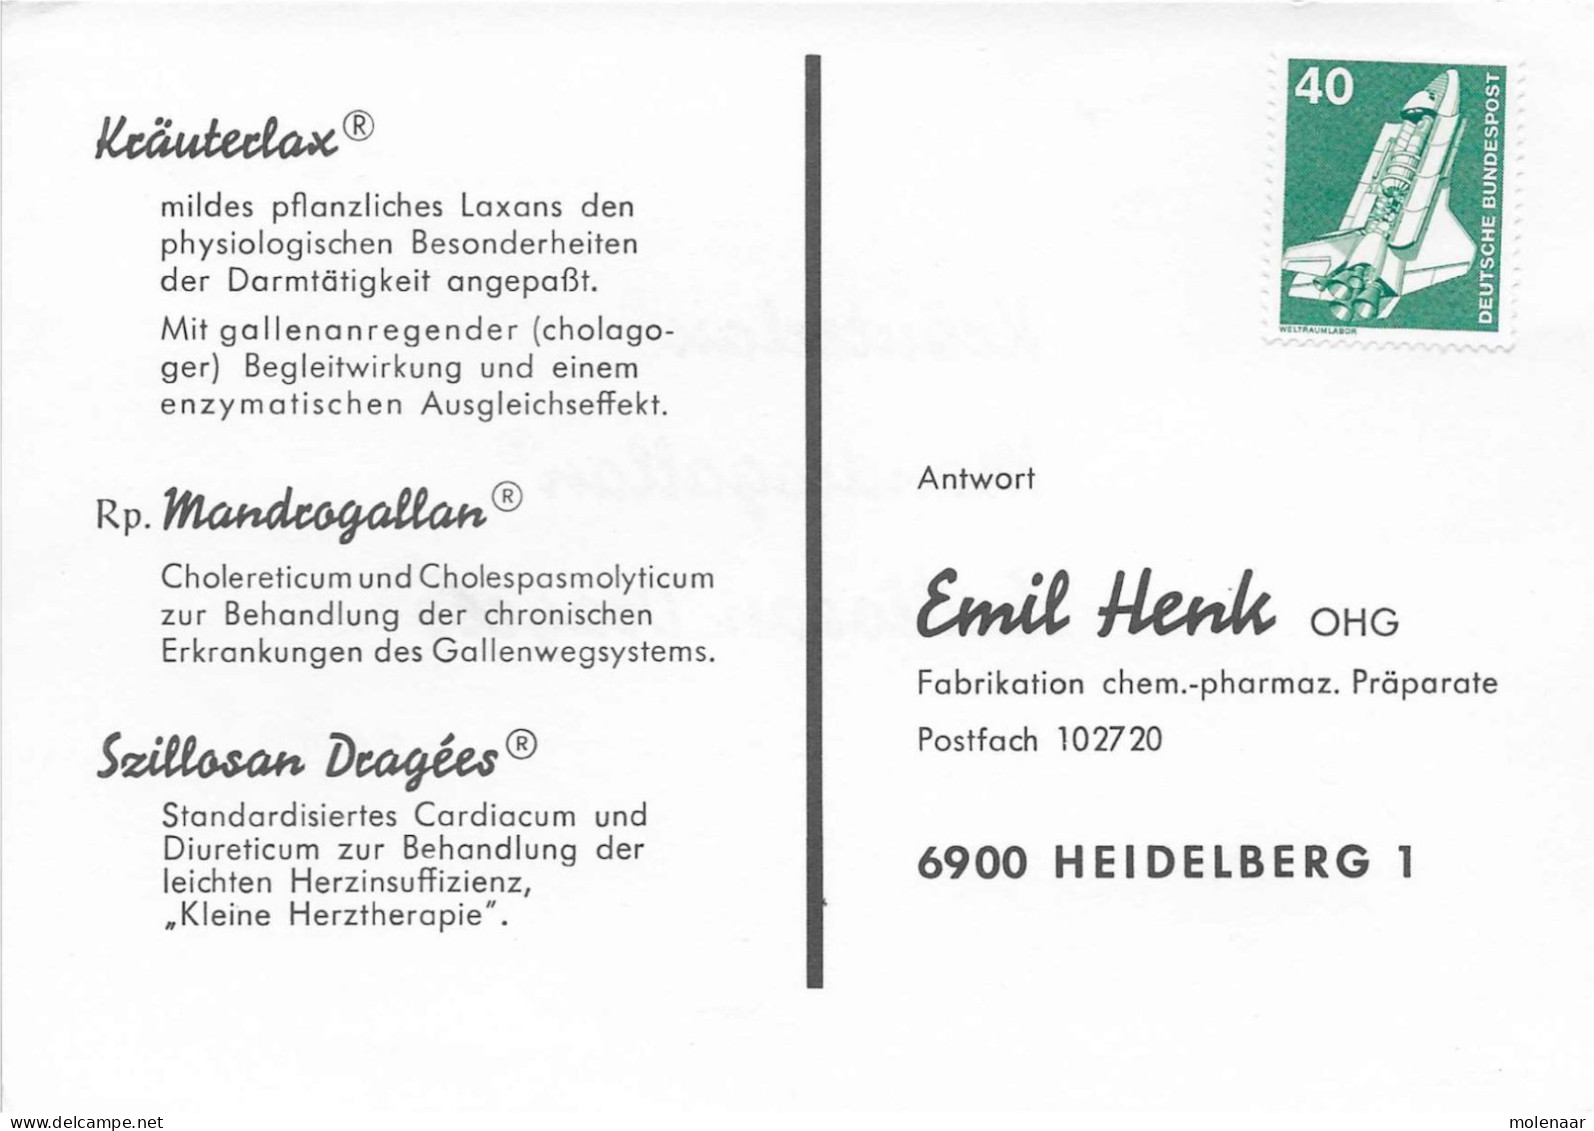 Postzegels > Europa > Duitsland > West-Duitsland > 1970-1979 > Kaart Met No. 850 (17309) - Covers & Documents